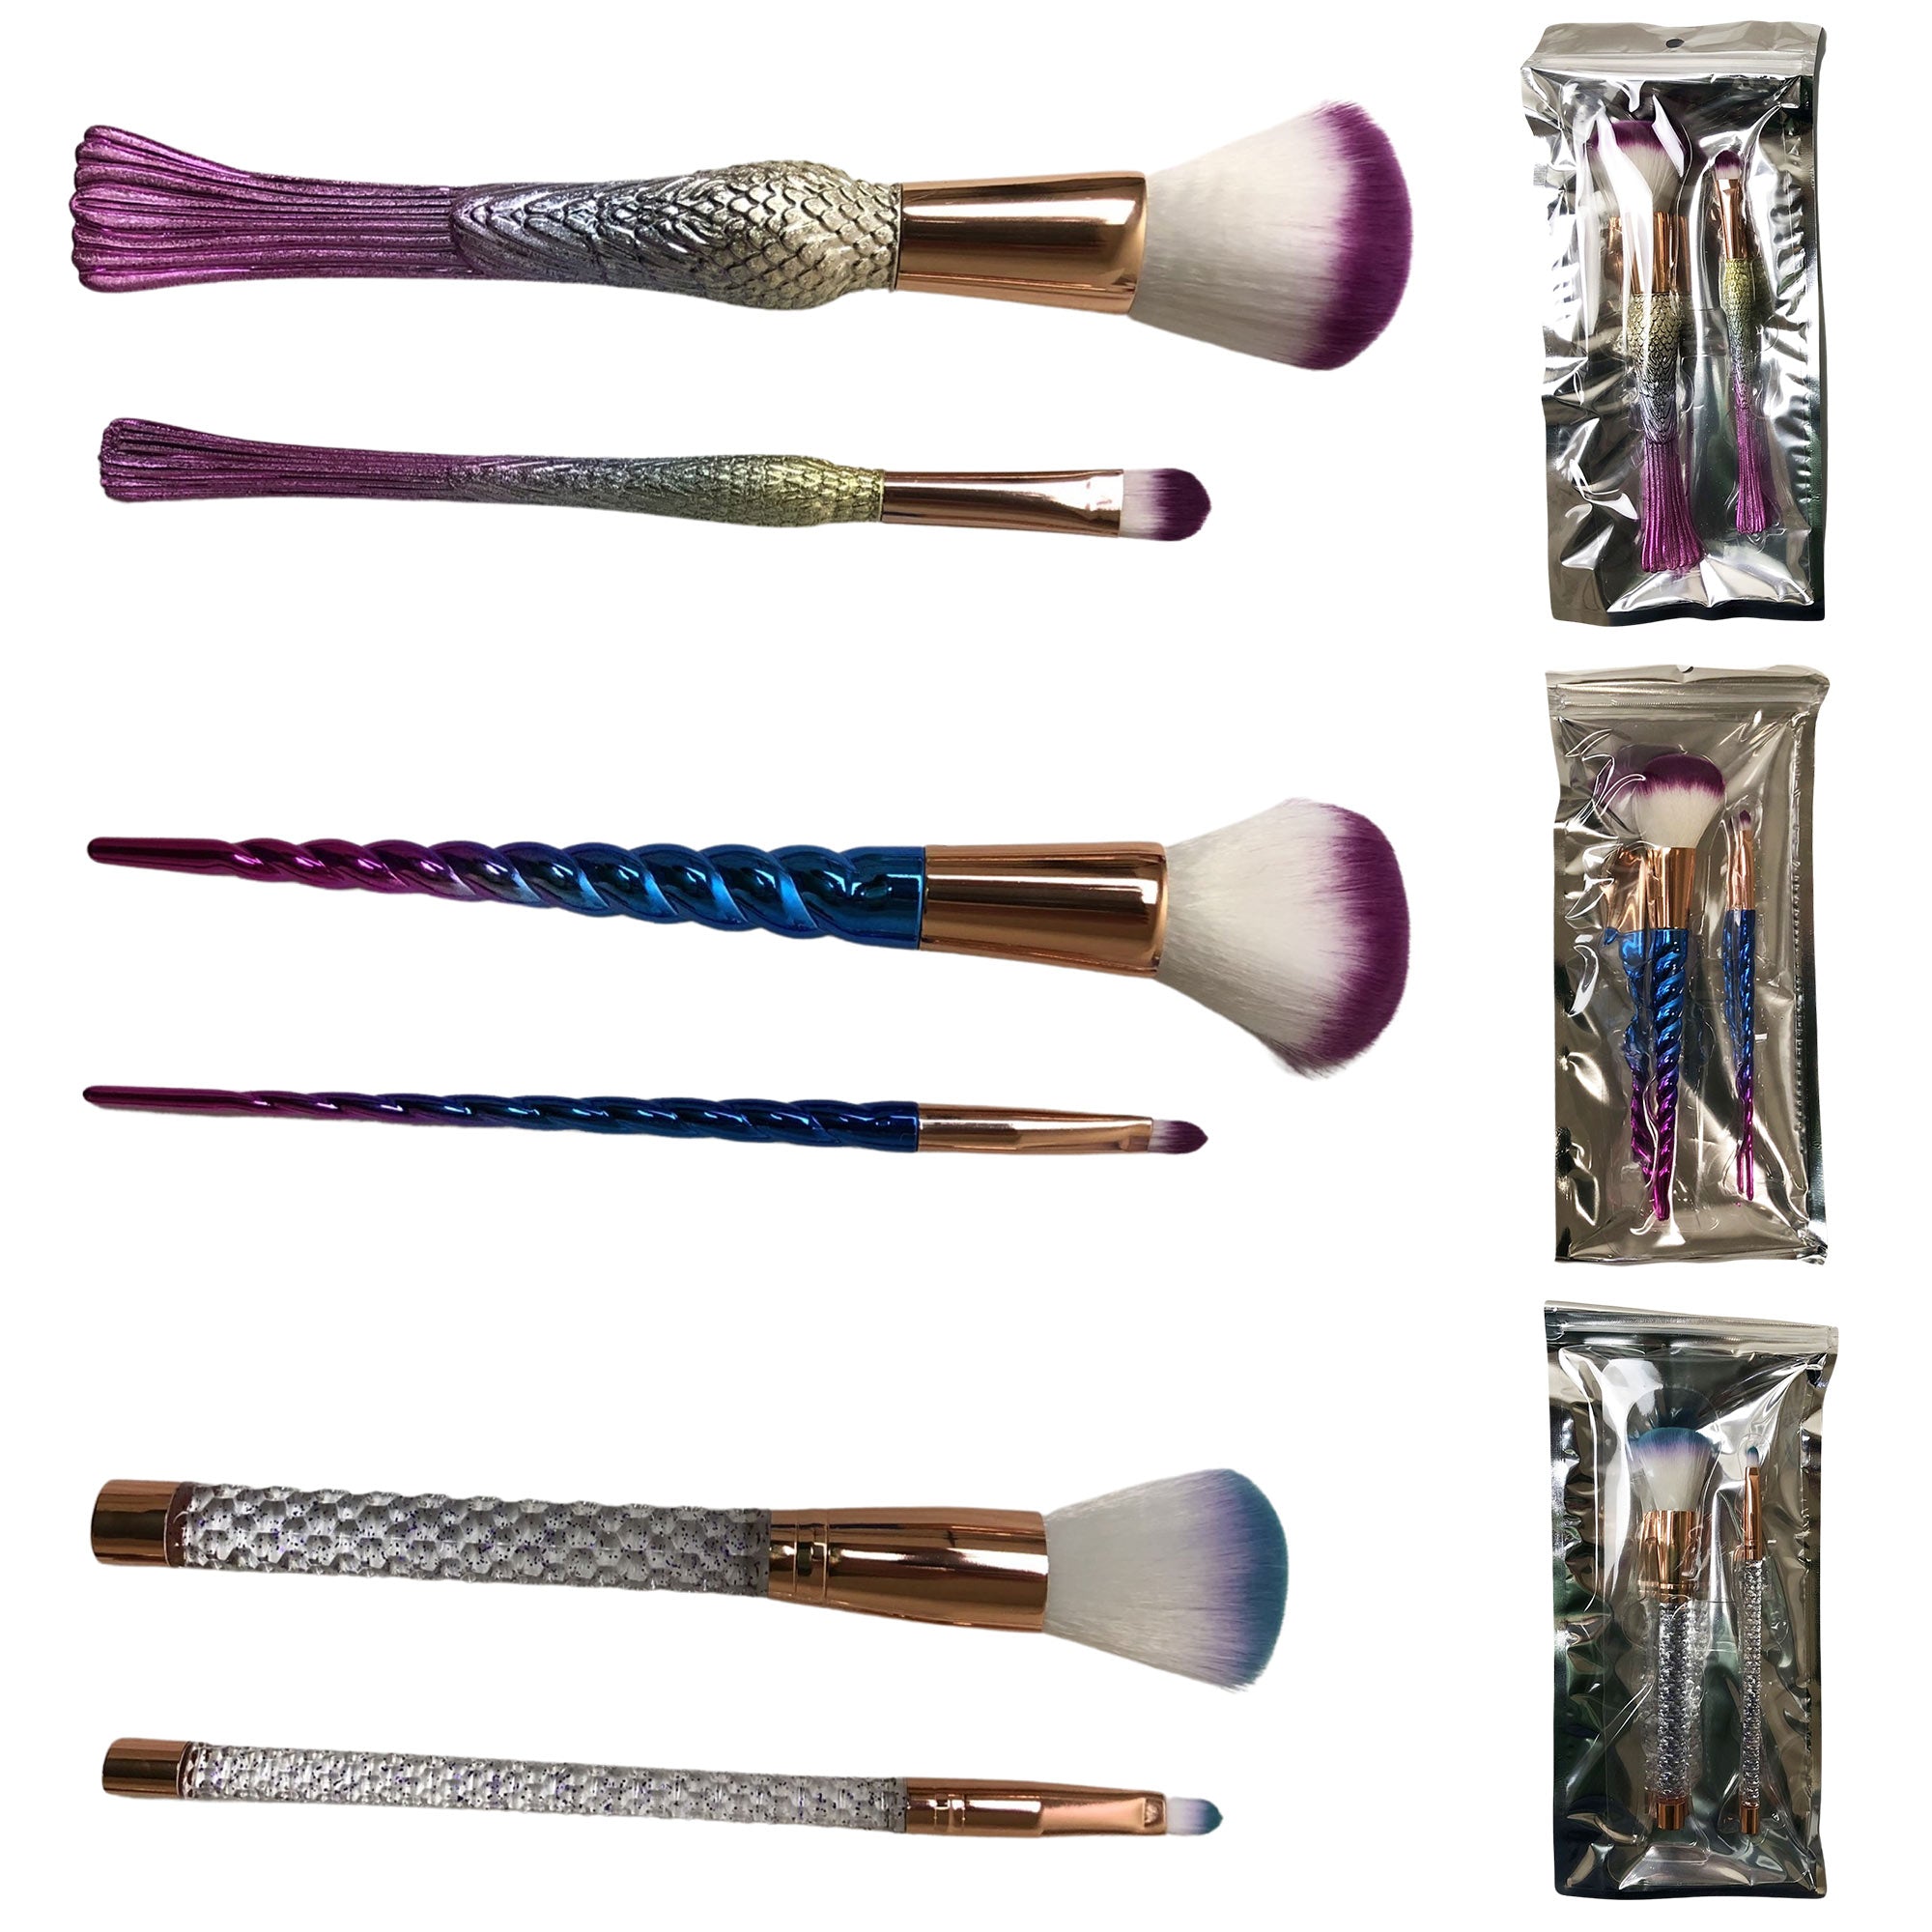 CLEARANCE MAKEUP BRUSHES - 2 PACK (CASE OF 24 - $2.50 / PIECE)  Wholesale 2 Piece Makeup Brush Set SKU: 869-24